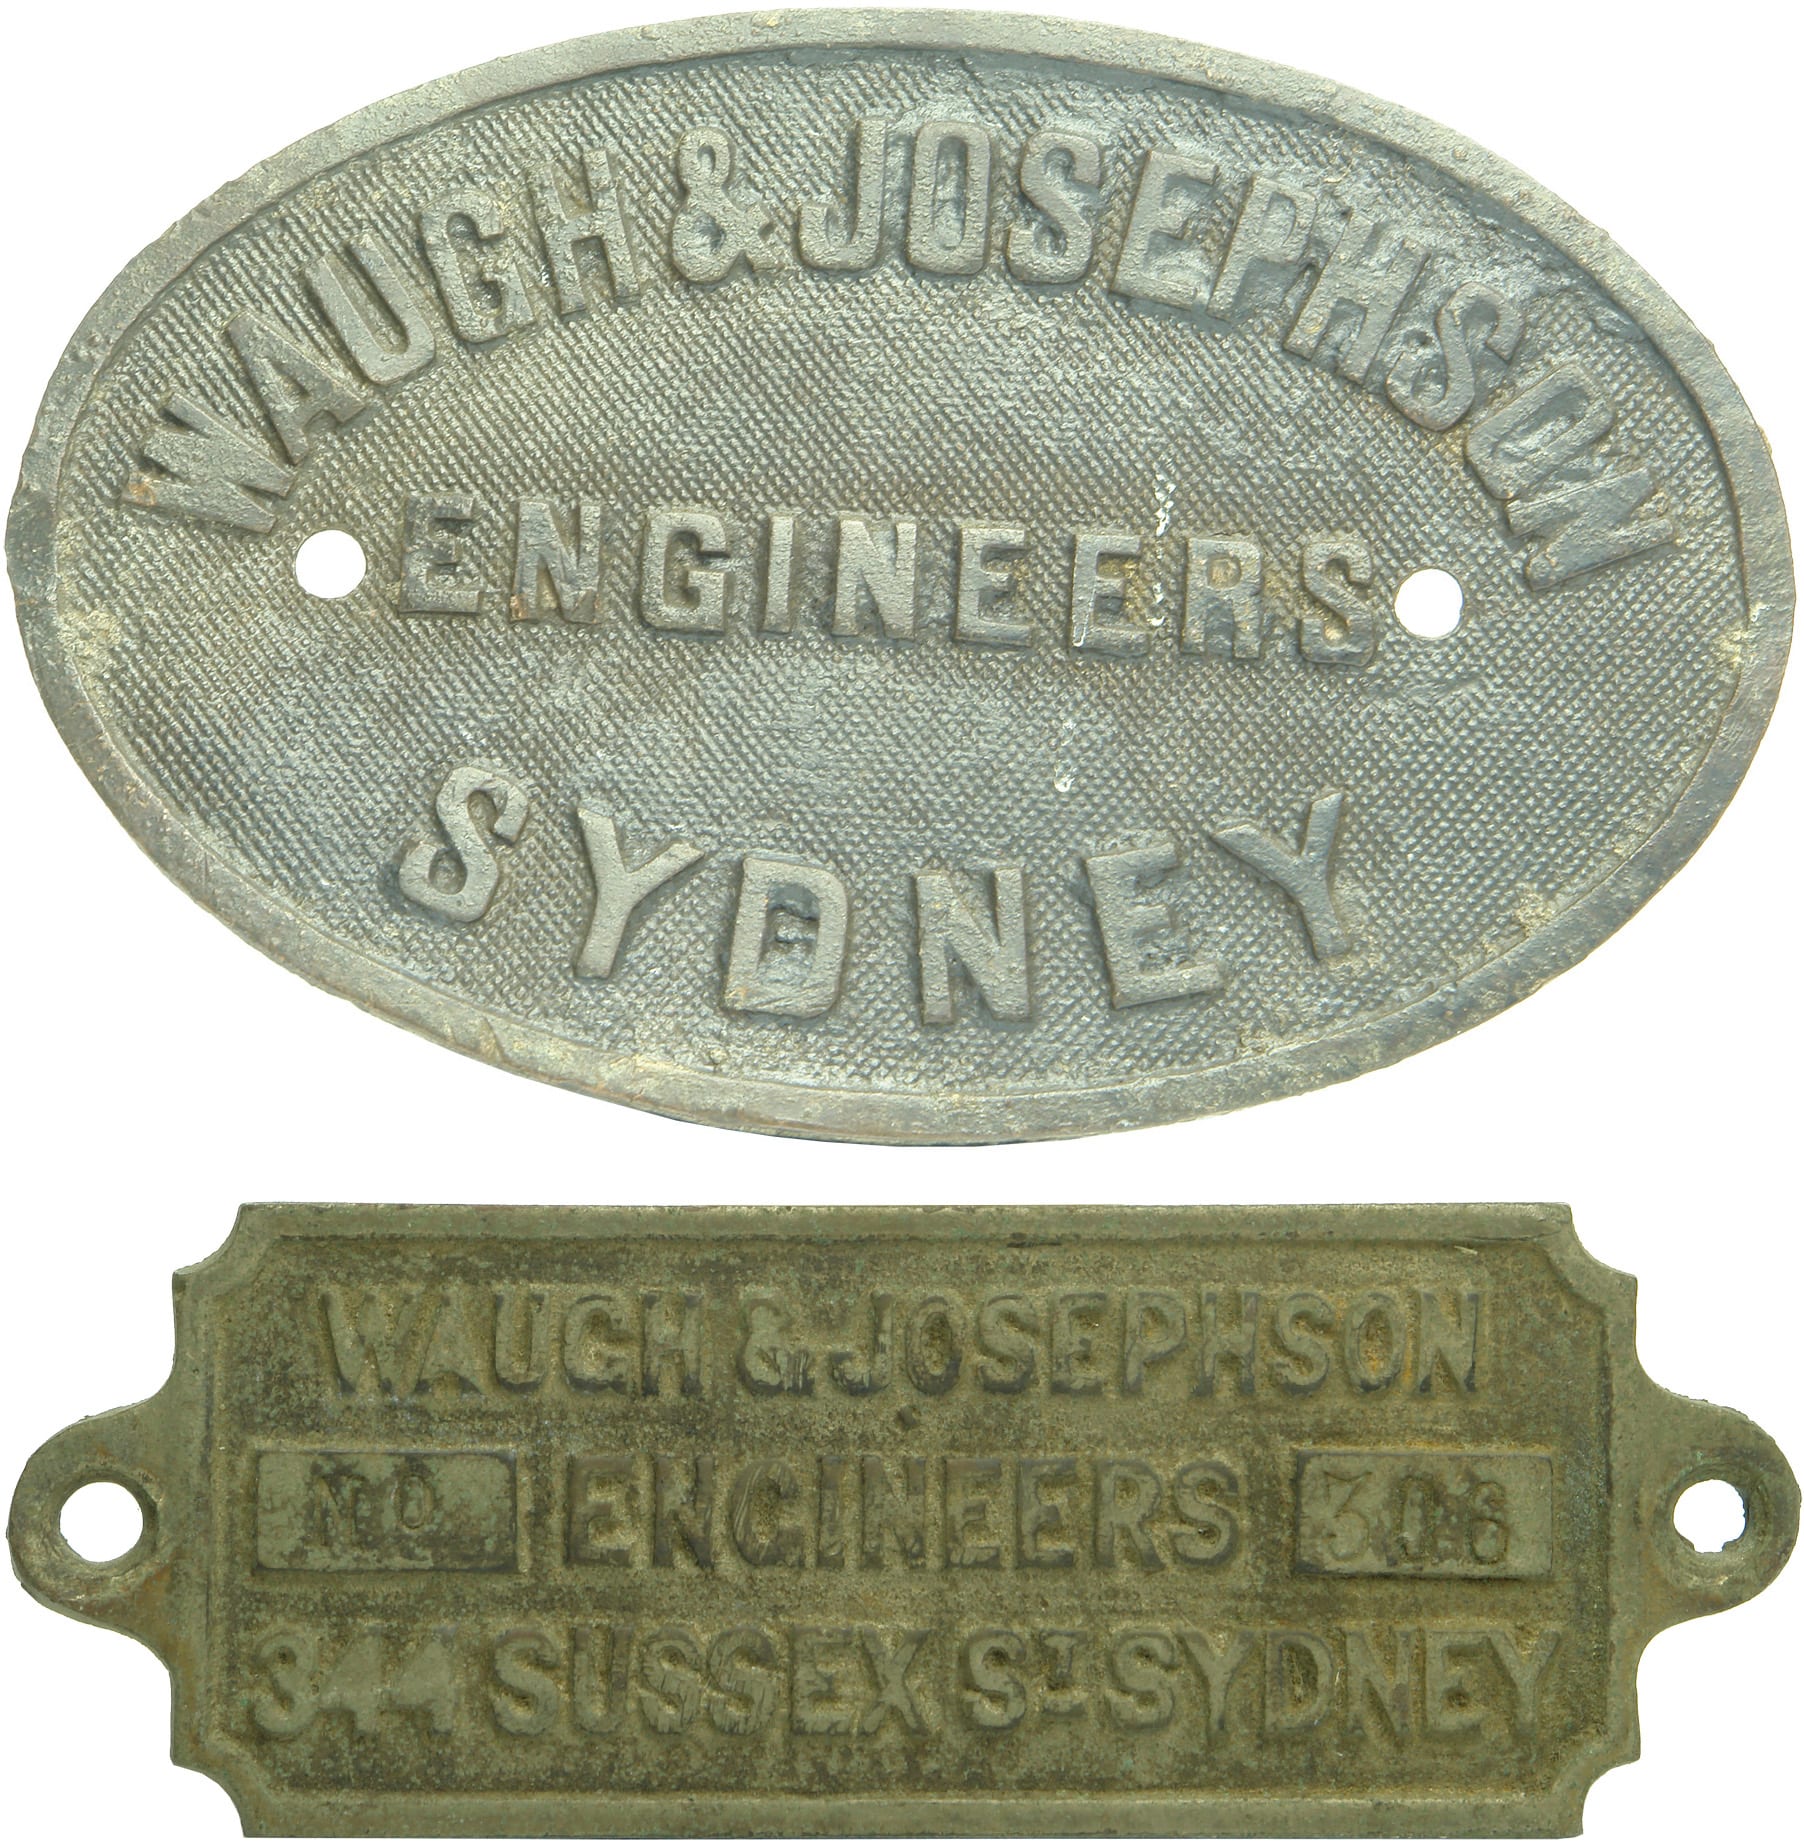 Waugh Josephson Sydney Metal Plaques